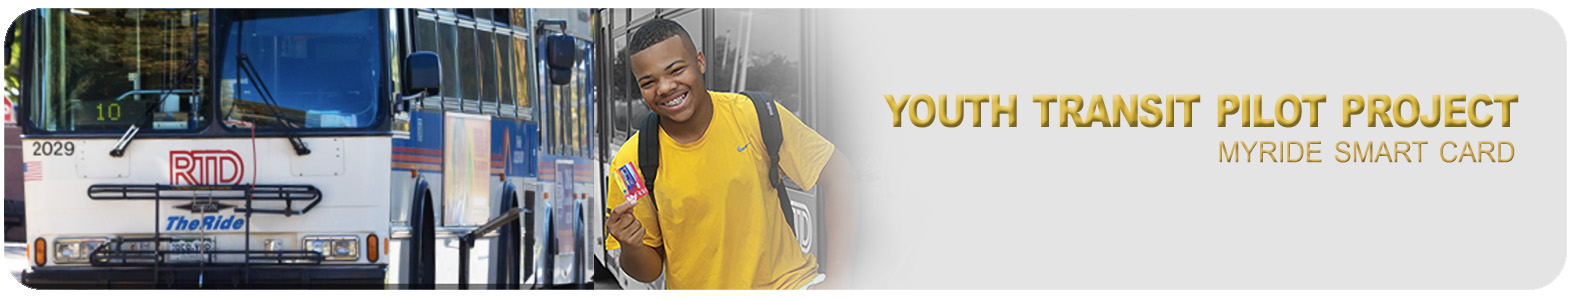 youth transit pilot project myride smart card